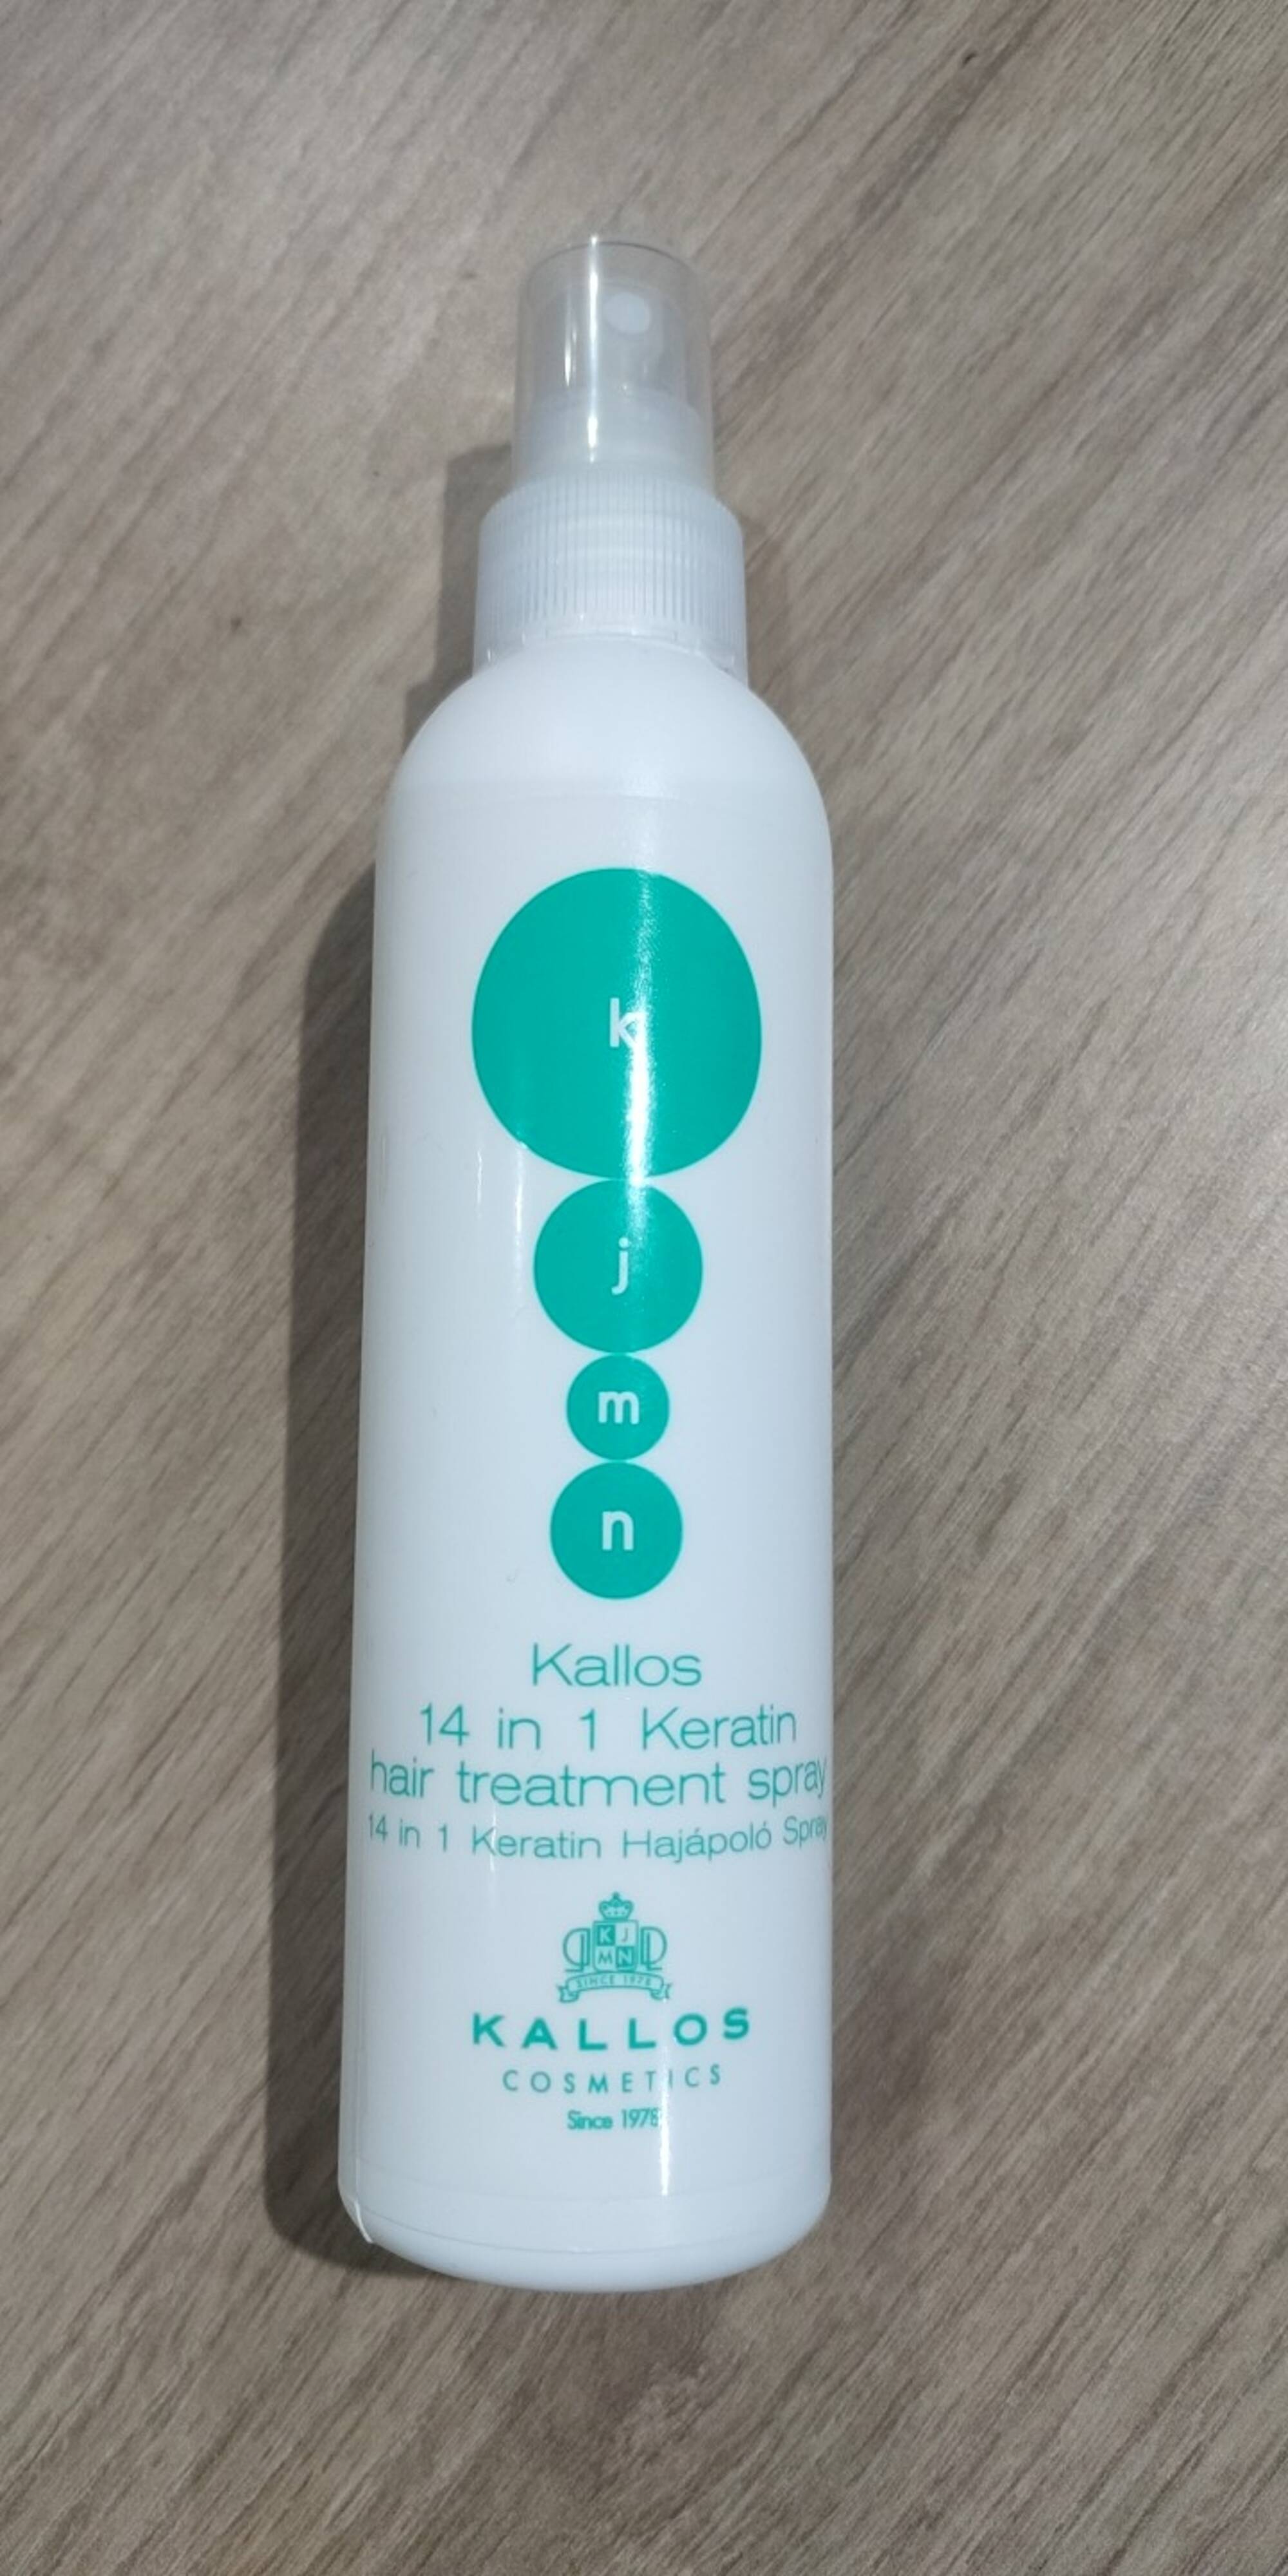 KALLOS COSMETICS - Kjmn 14 in 1 keratin hair treatment spray